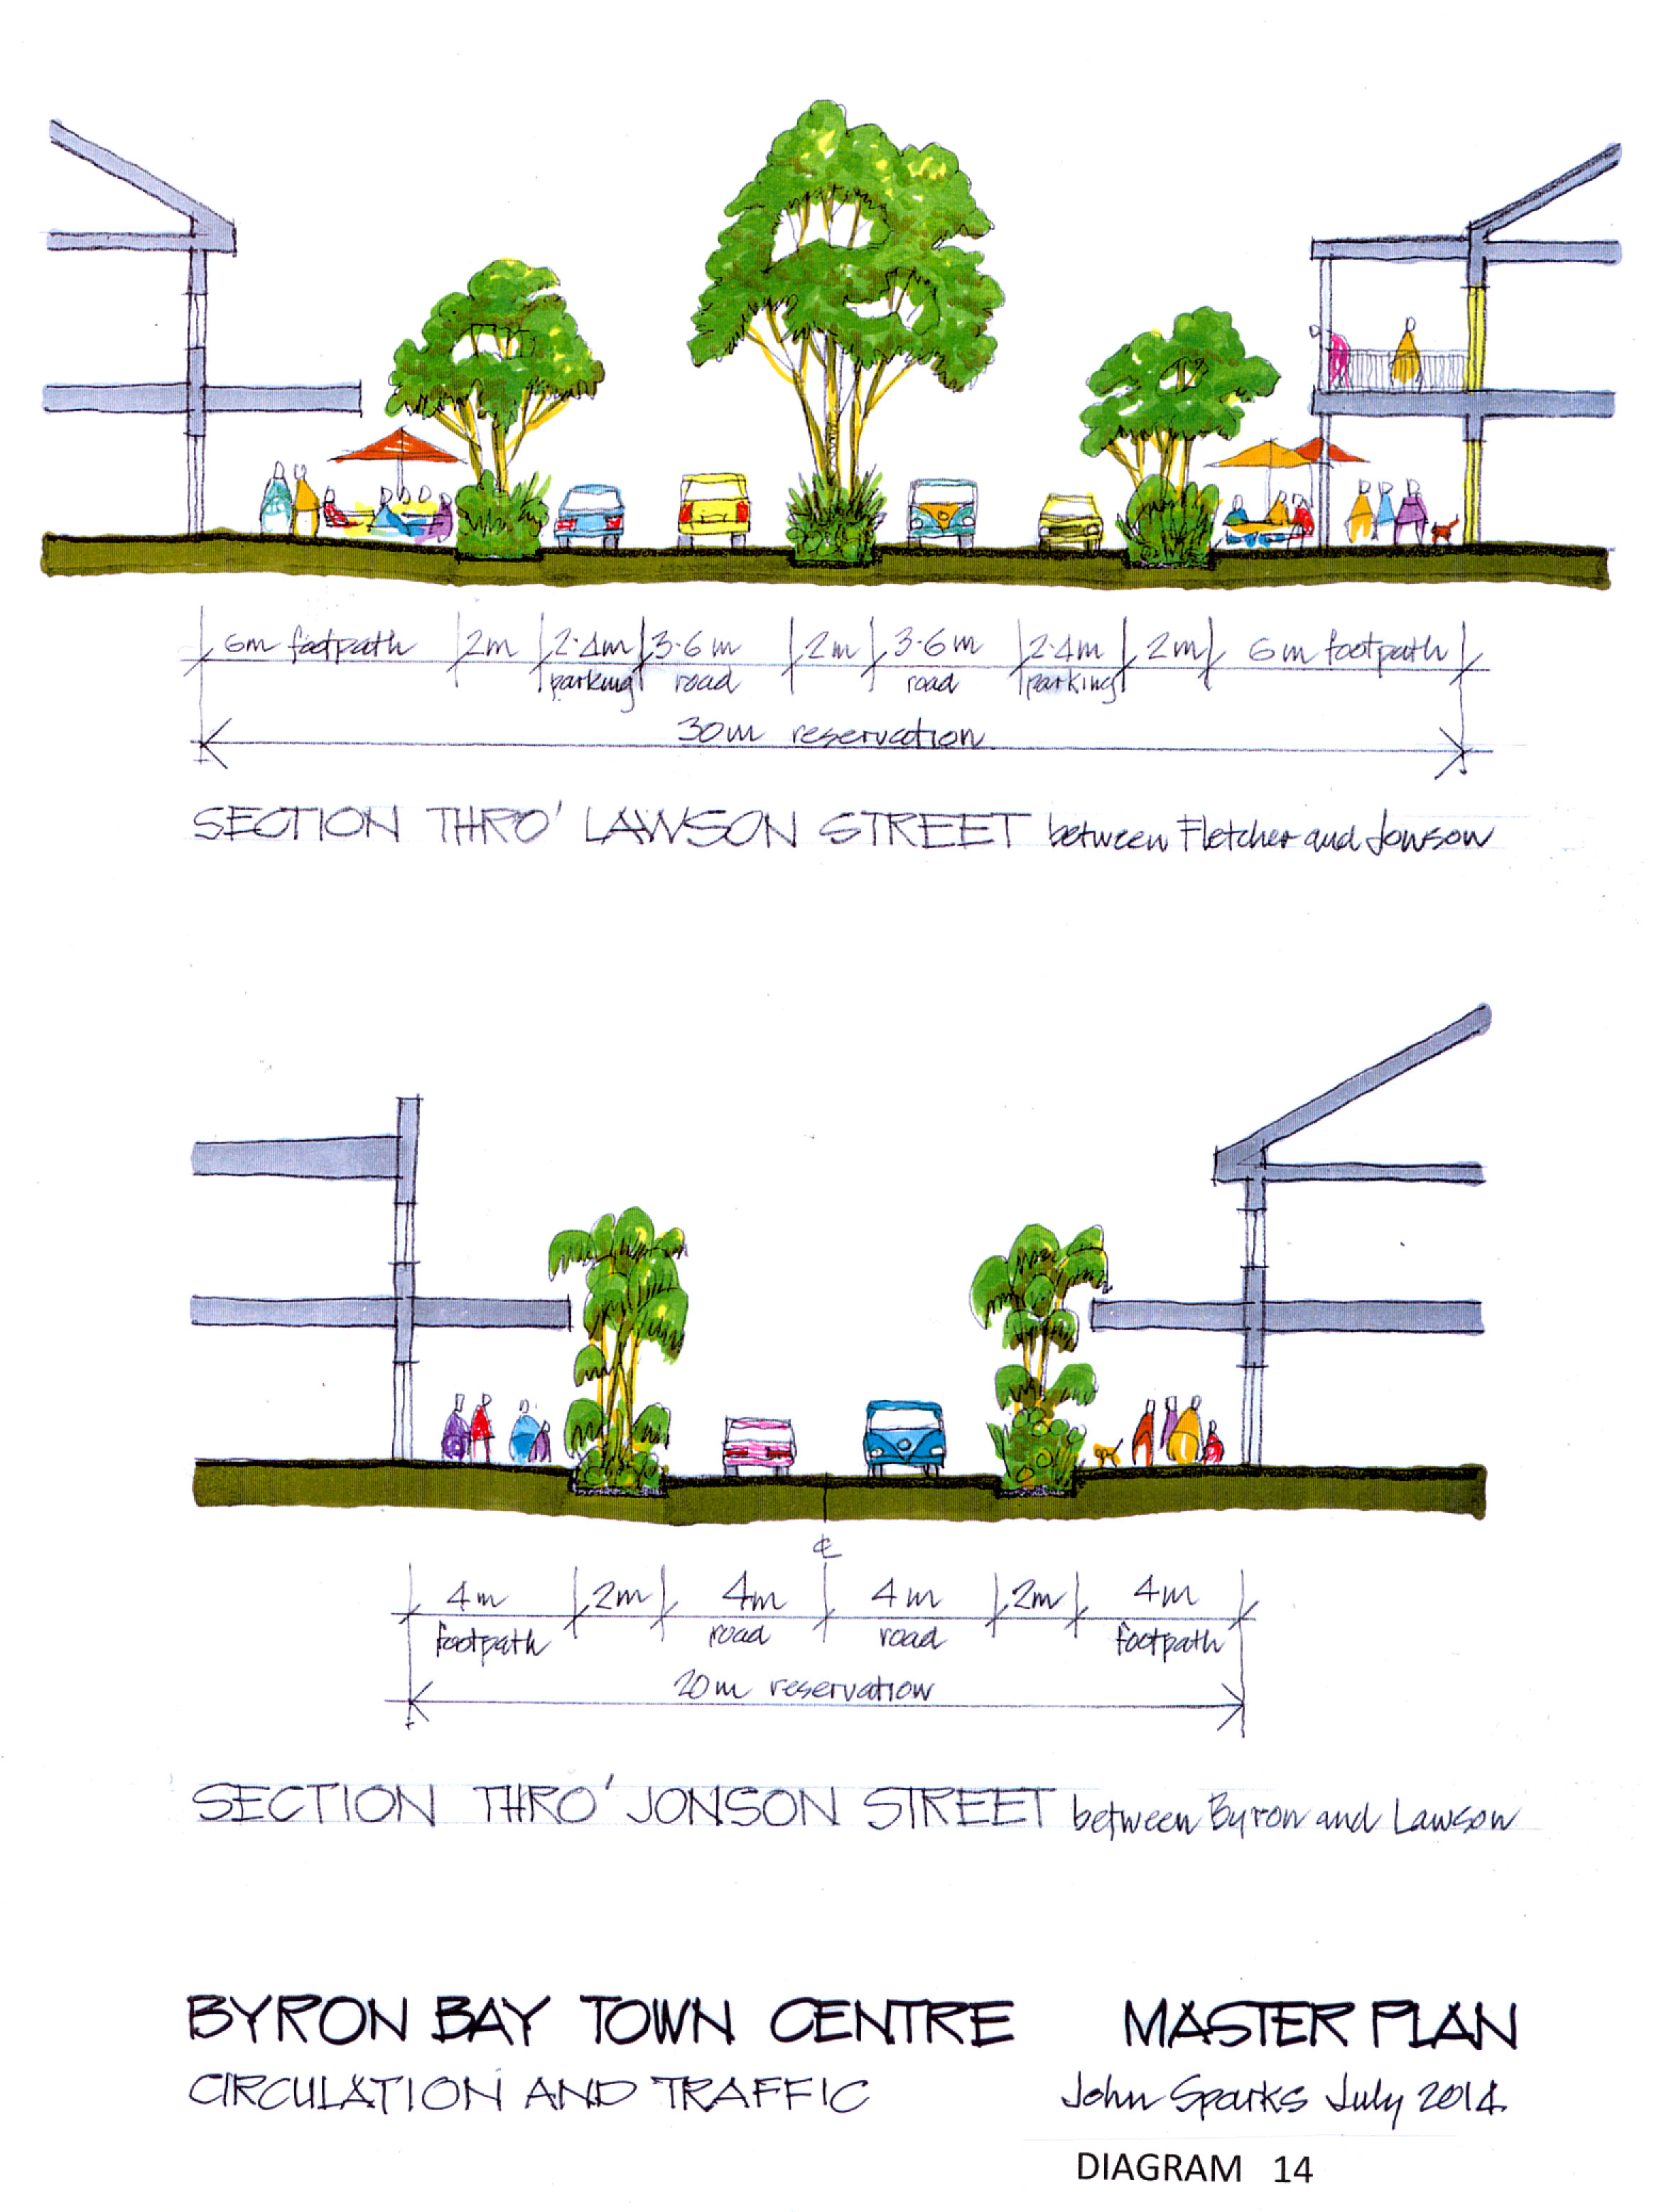 BYRON BAY TOWN CENTRE MASTER PLAN diagram14